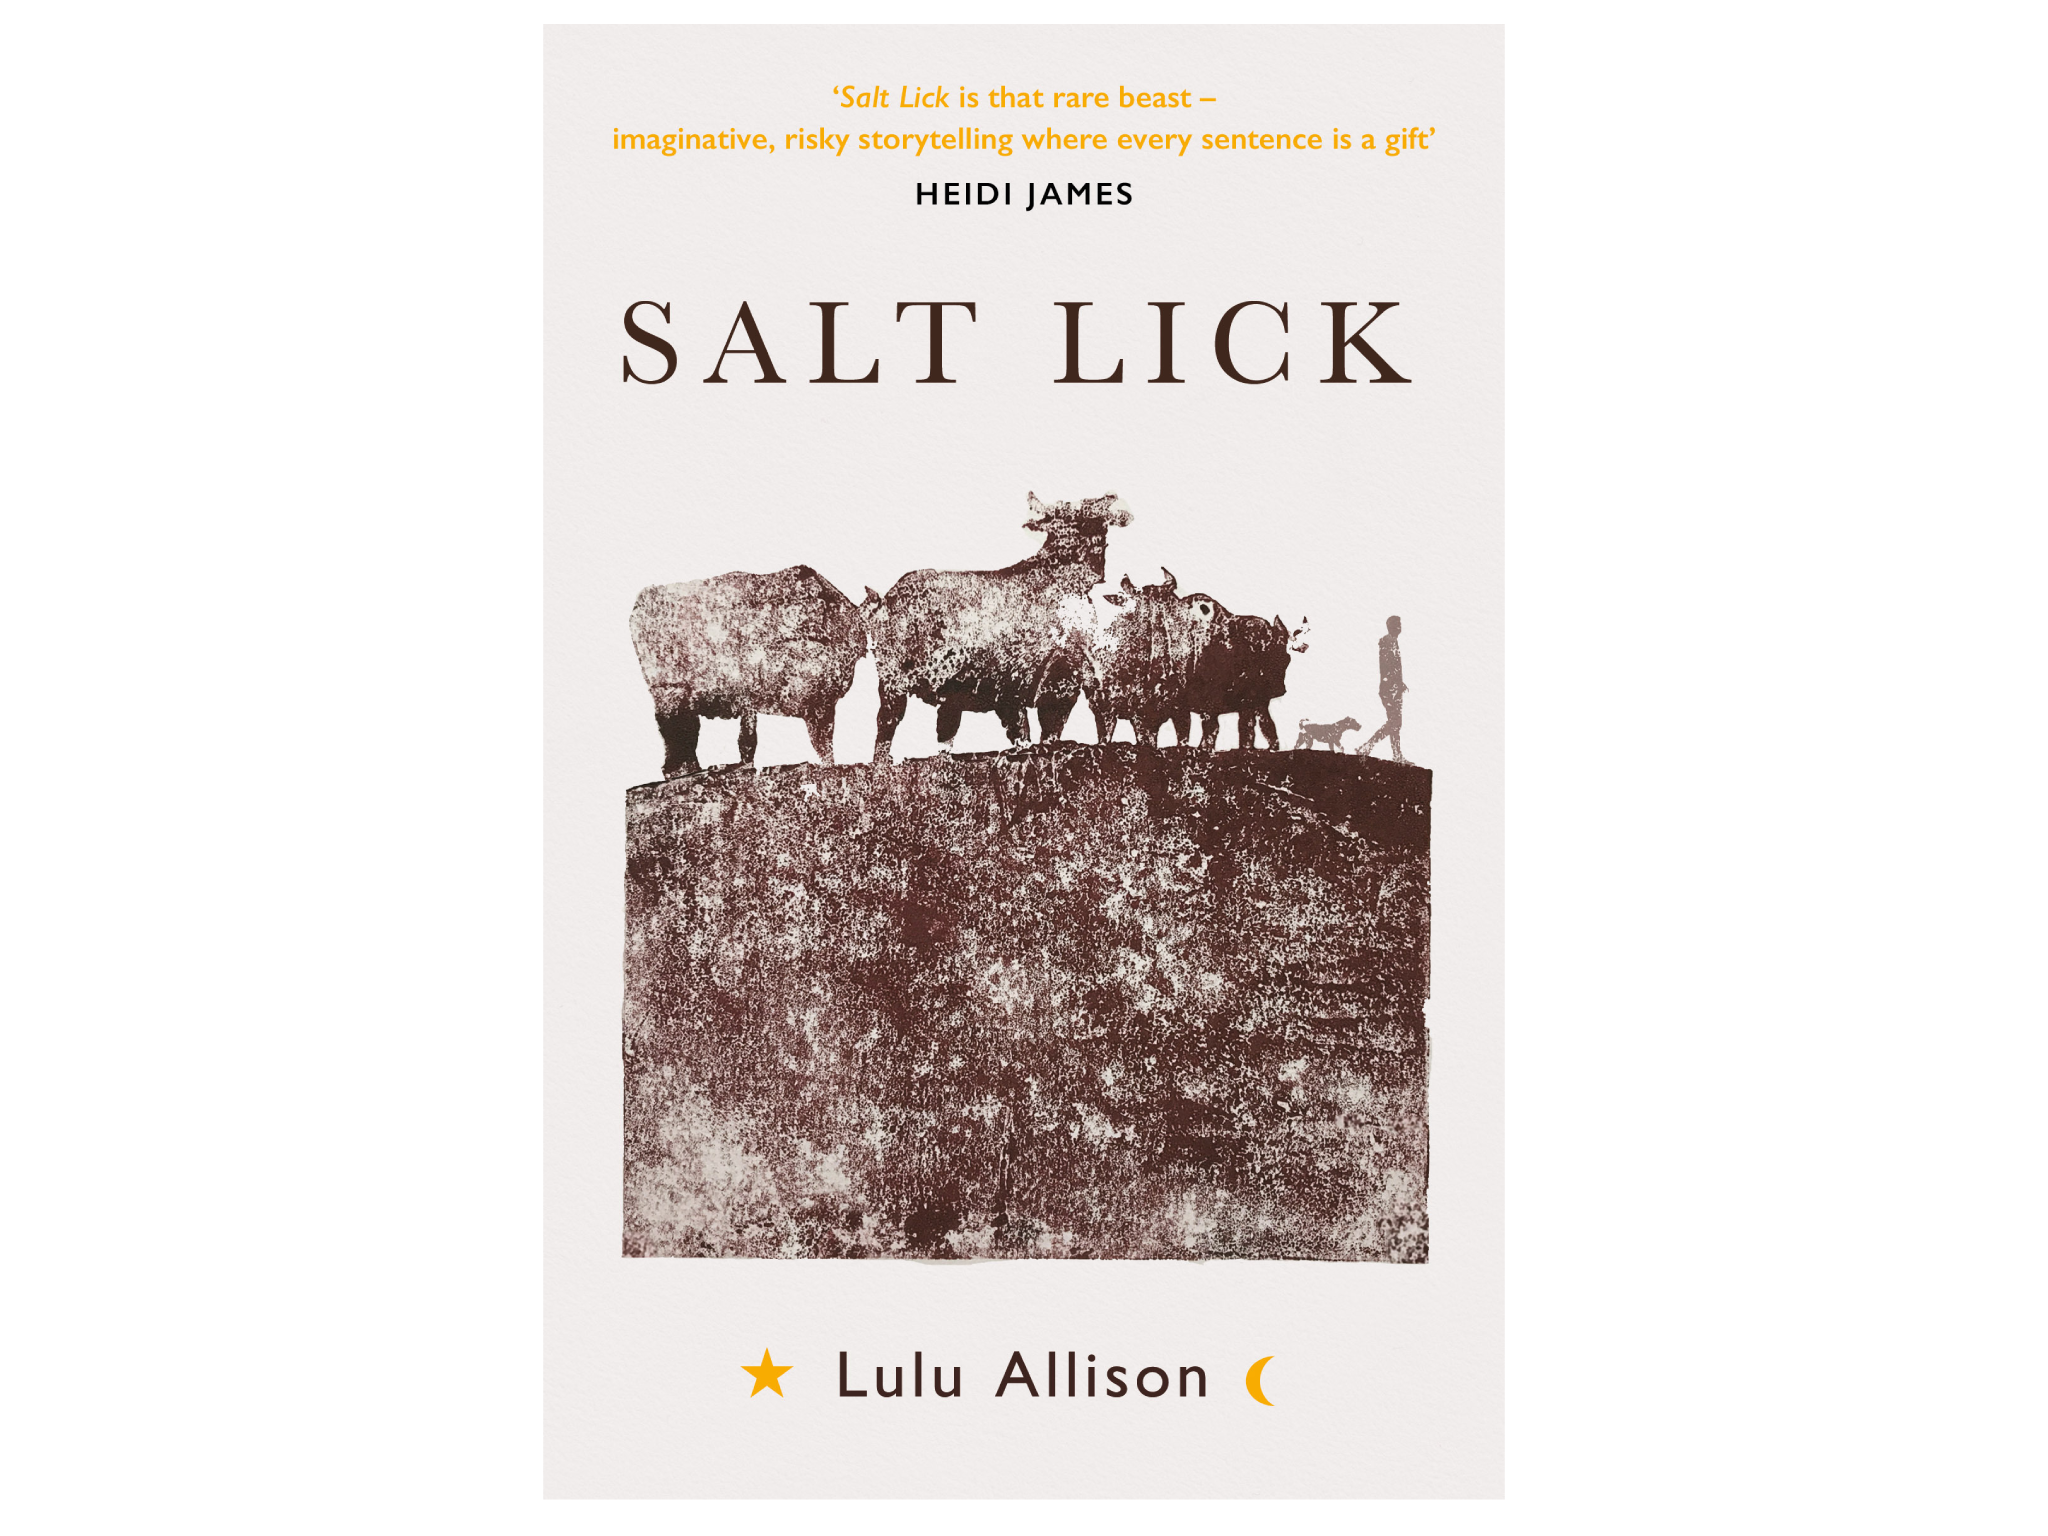 Salt-Lick-womens-prize-for-fiction-longlist-indybest